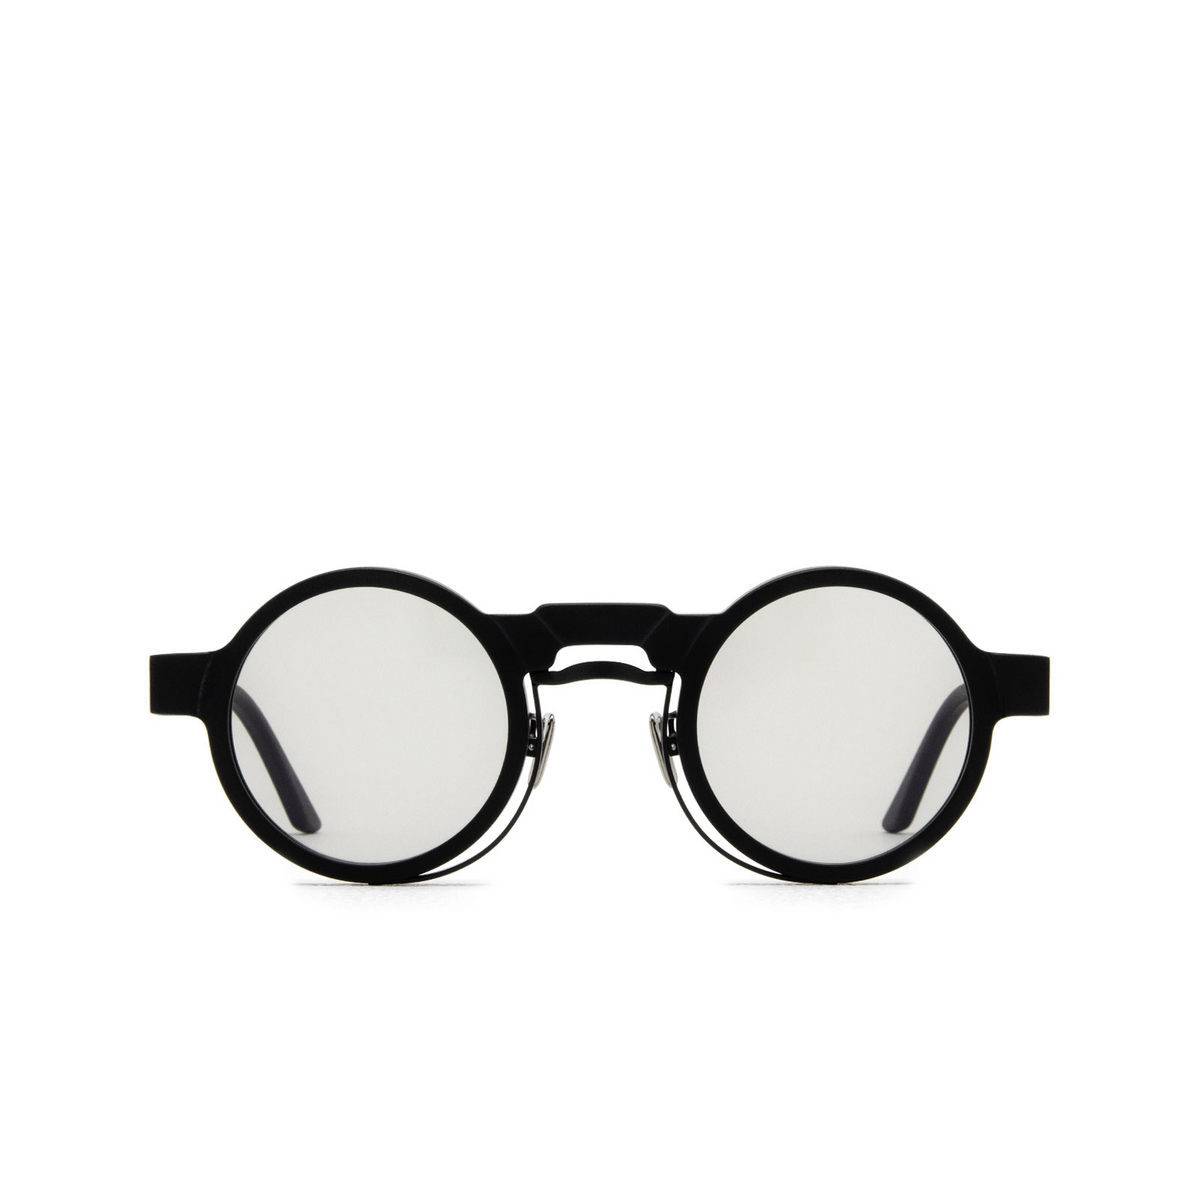 Kuboraum® Round Sunglasses: N3 color Black Matt Bm - front view.